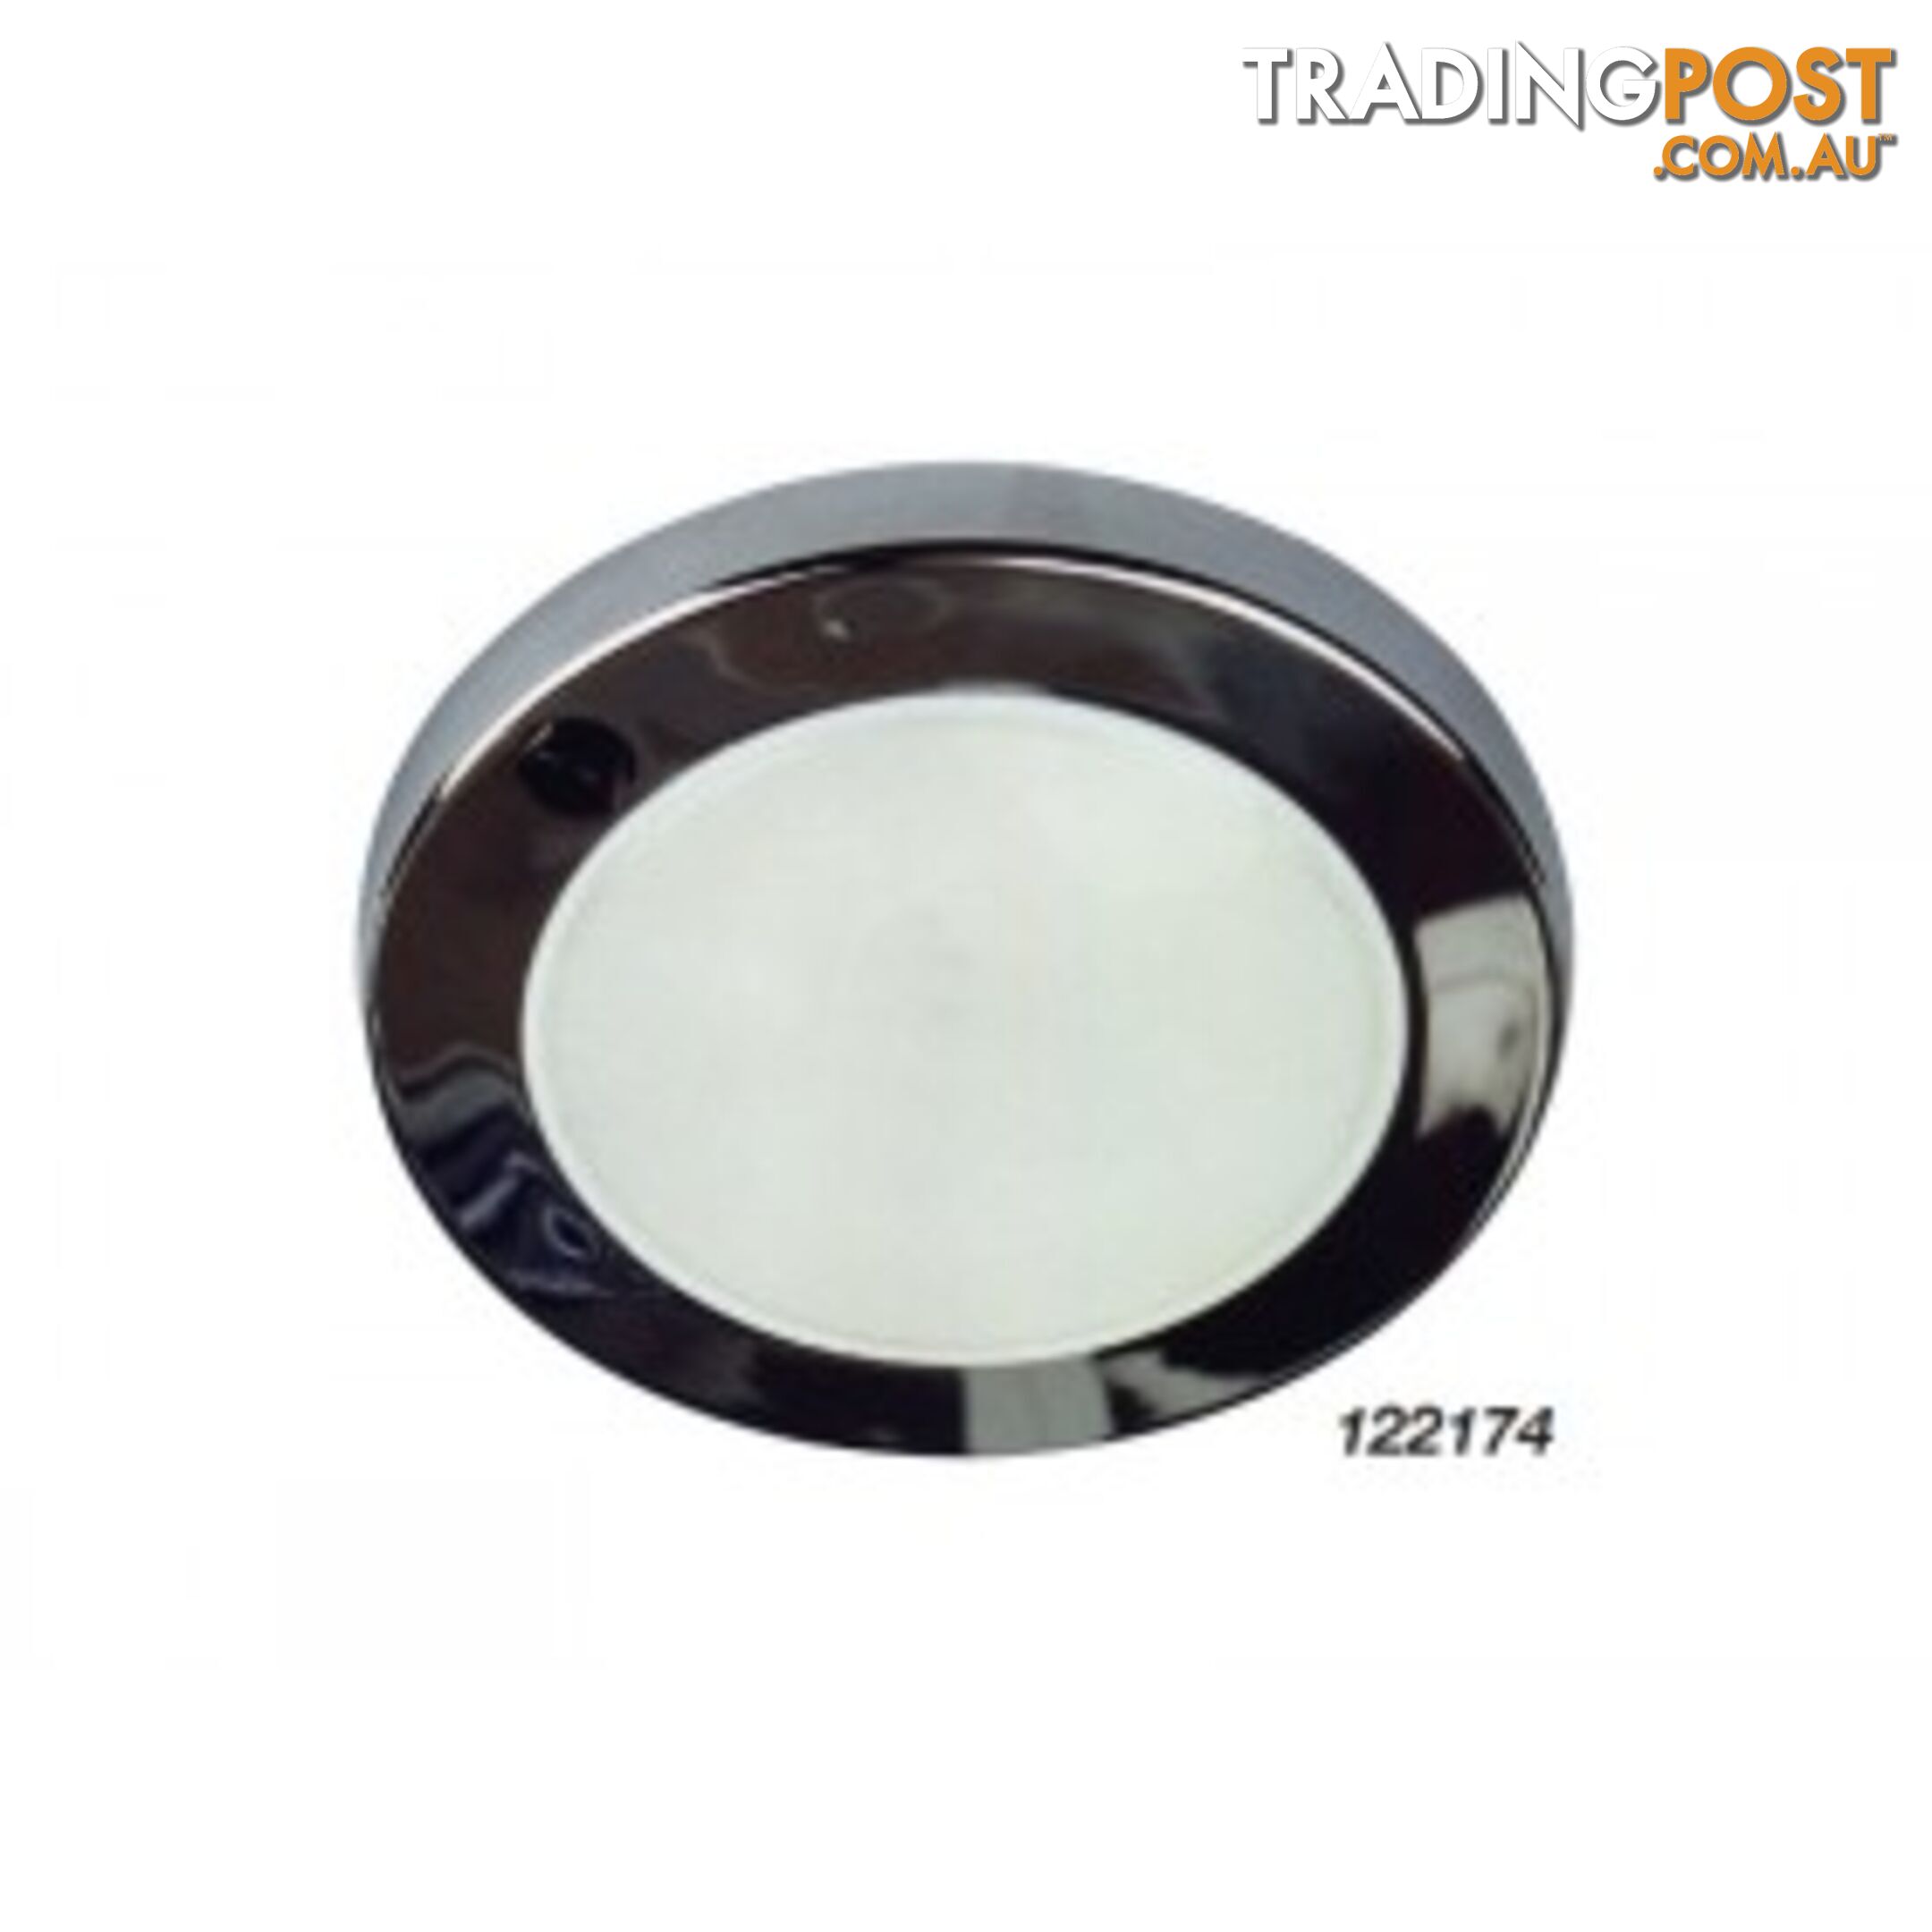 Frilight Light - Saturn Light Chrome - 122174